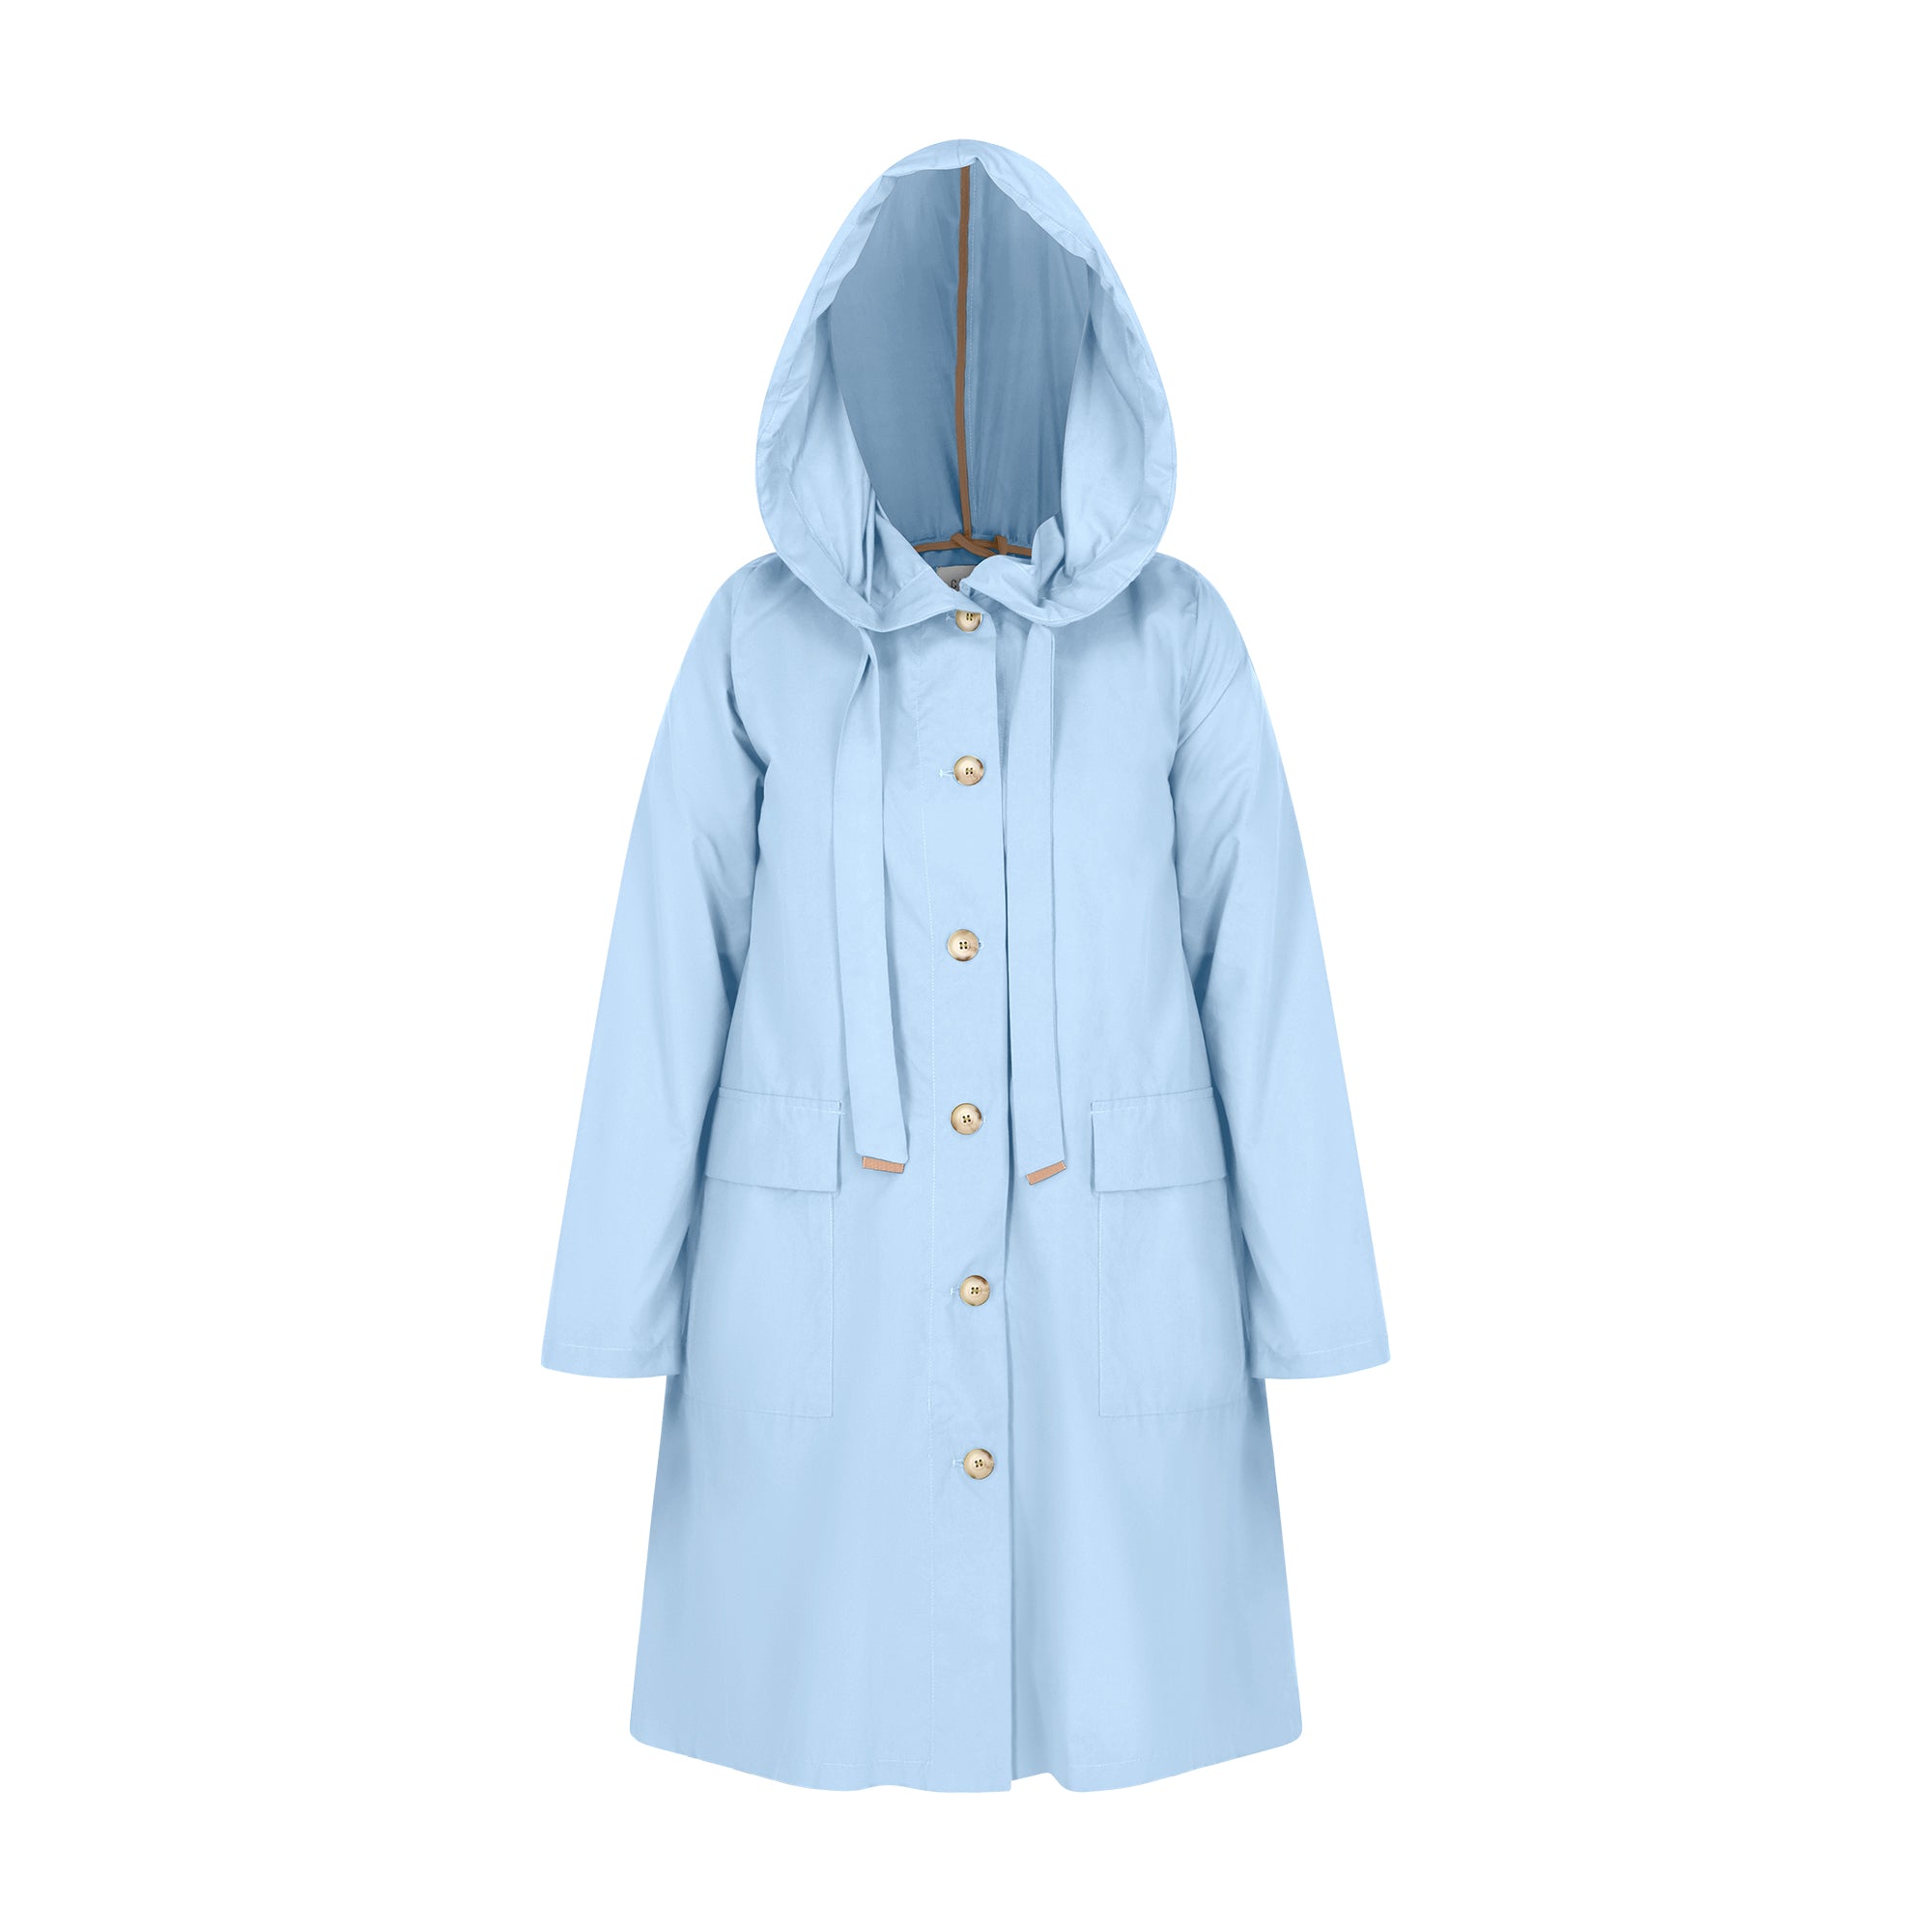 The Classic raincoat - azur blue - front view